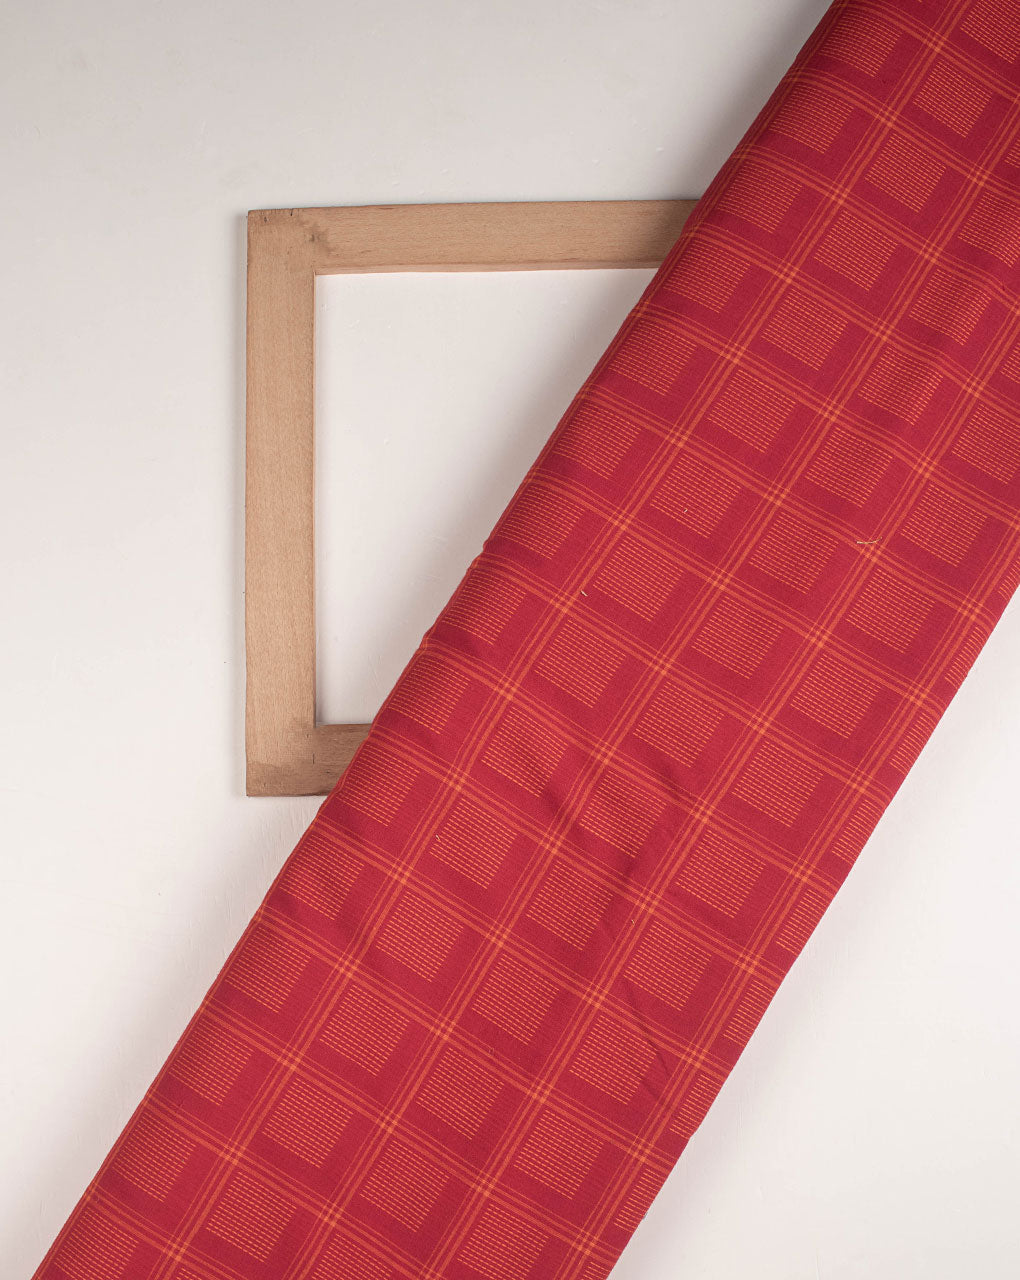 Checks Woven Kantha Loom Textured Cotton Fabric - Fabriclore.com